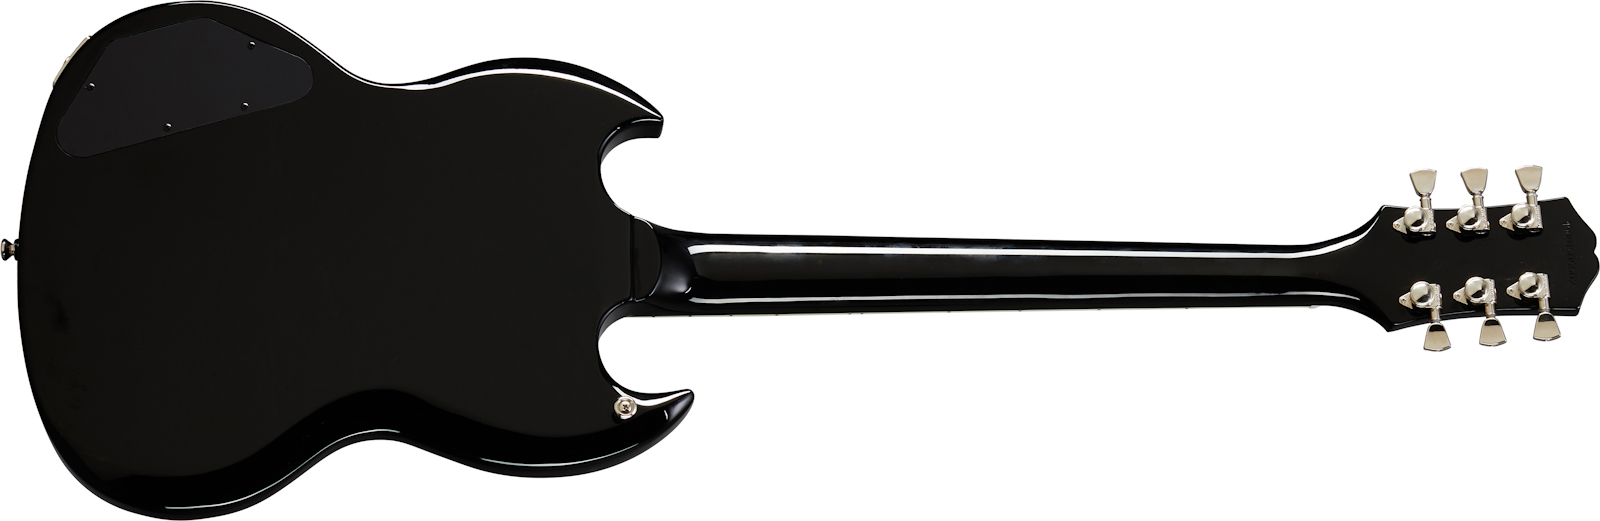 Epiphone Sg Modern Figured 2h Ht Eb - Black Transparent - Guitarra eléctrica de doble corte. - Variation 1